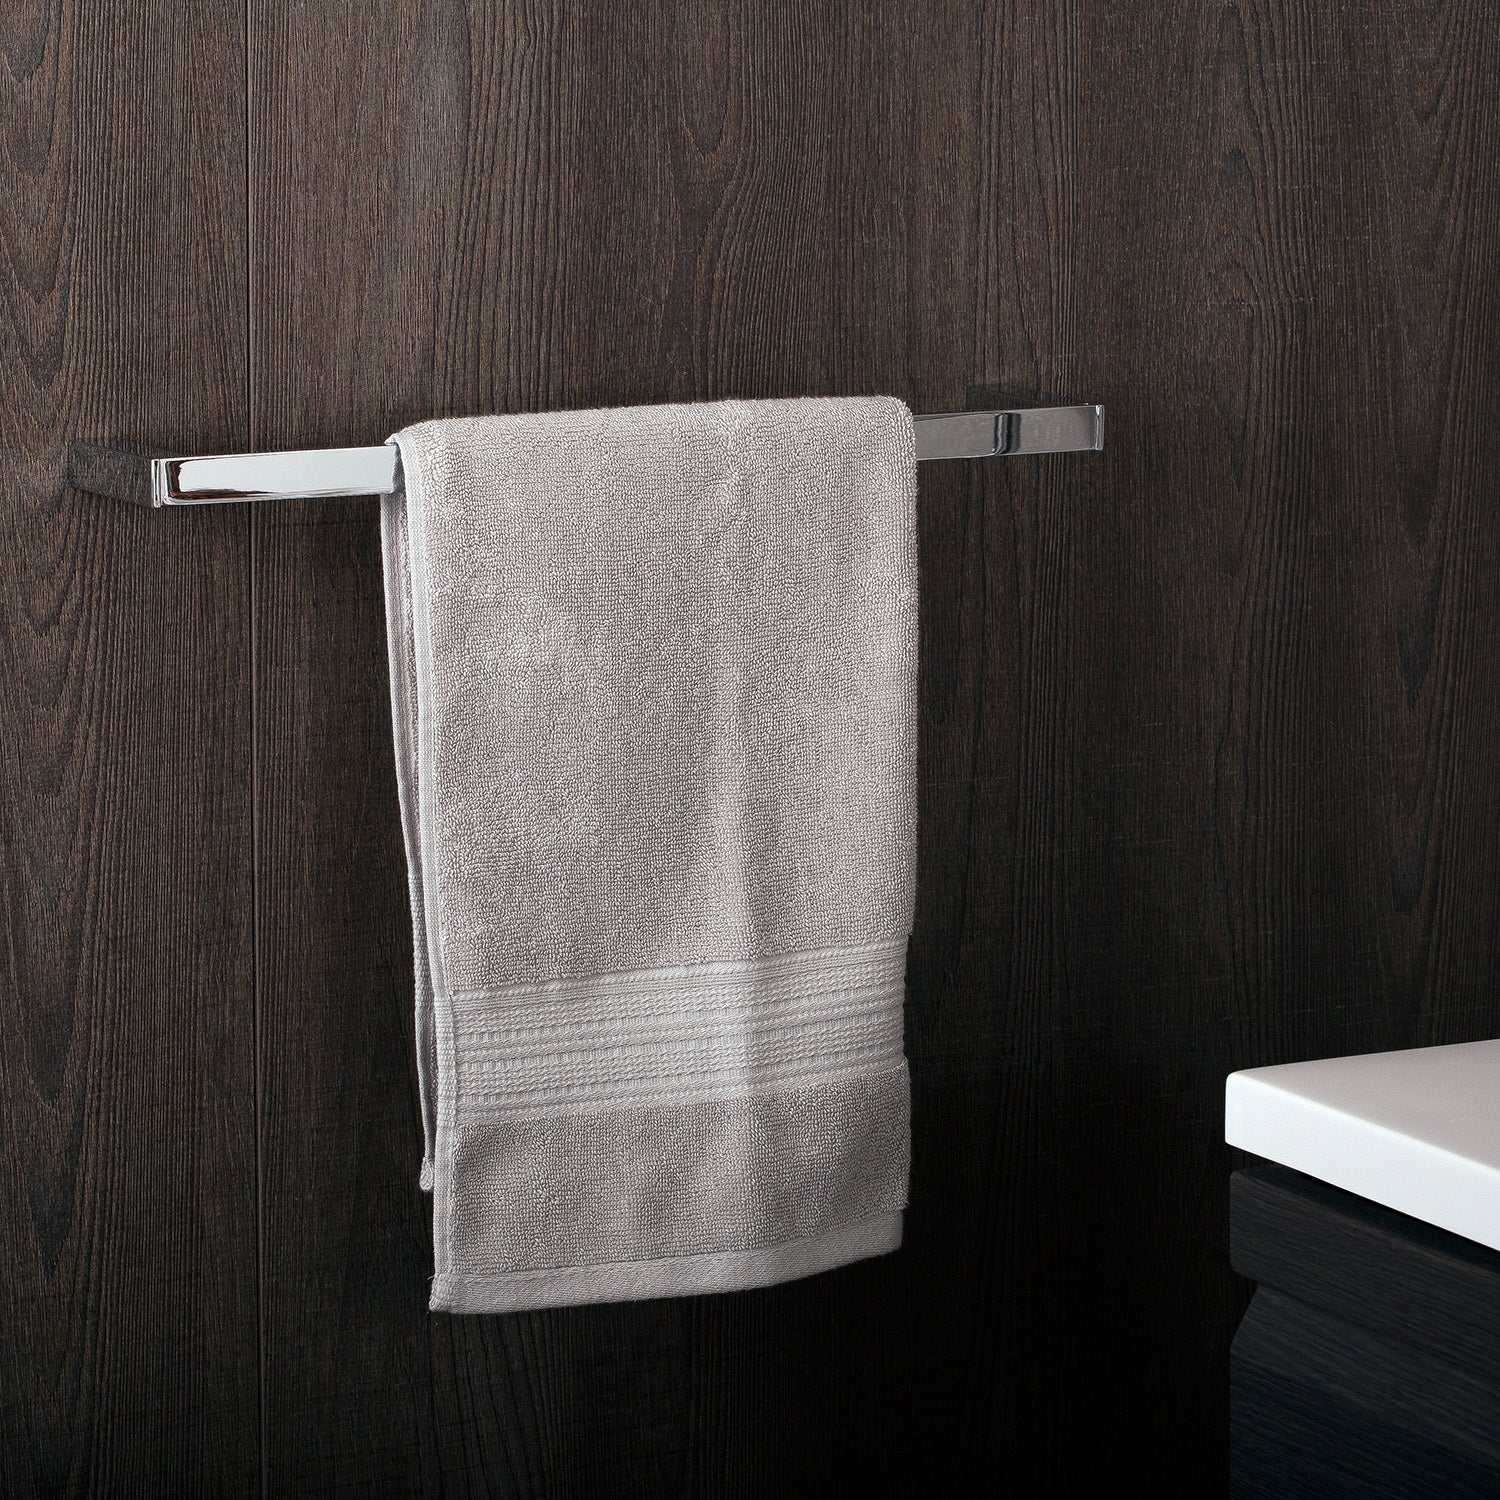 COSMIC Bathlife Single Towel Bar, Wall Mount, Brass Body, Chrome Finish, 23-5/8 x 13/16 x 3-5/16 Inches (2290164)